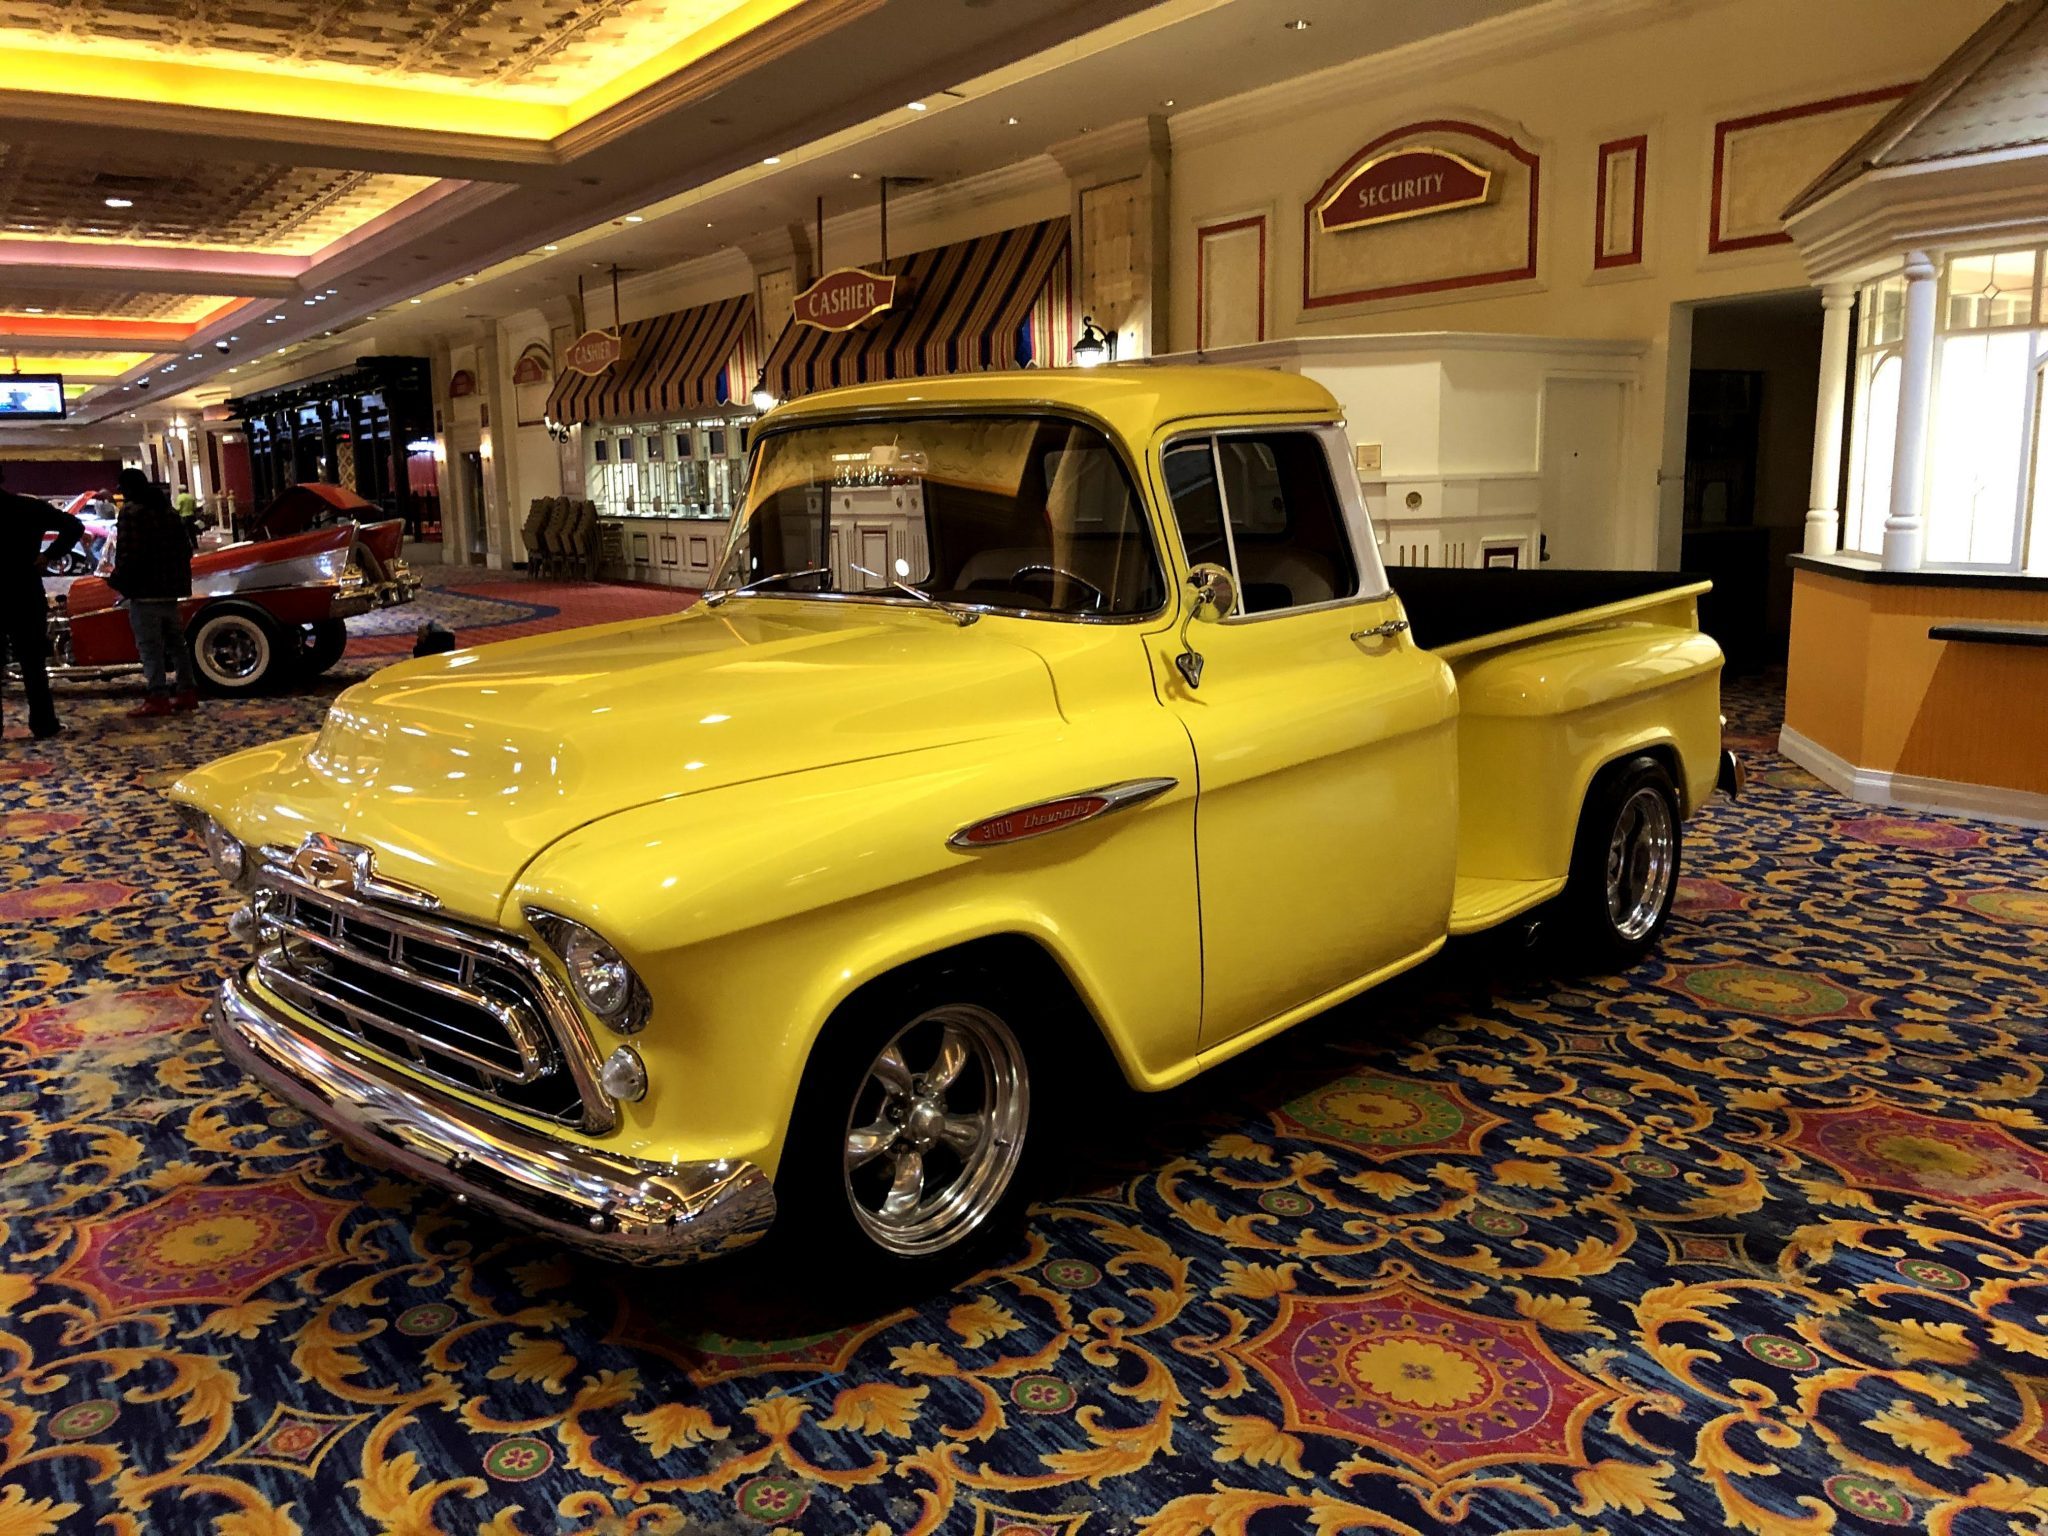 1957 Chevrolet 3100 restomodded truck.